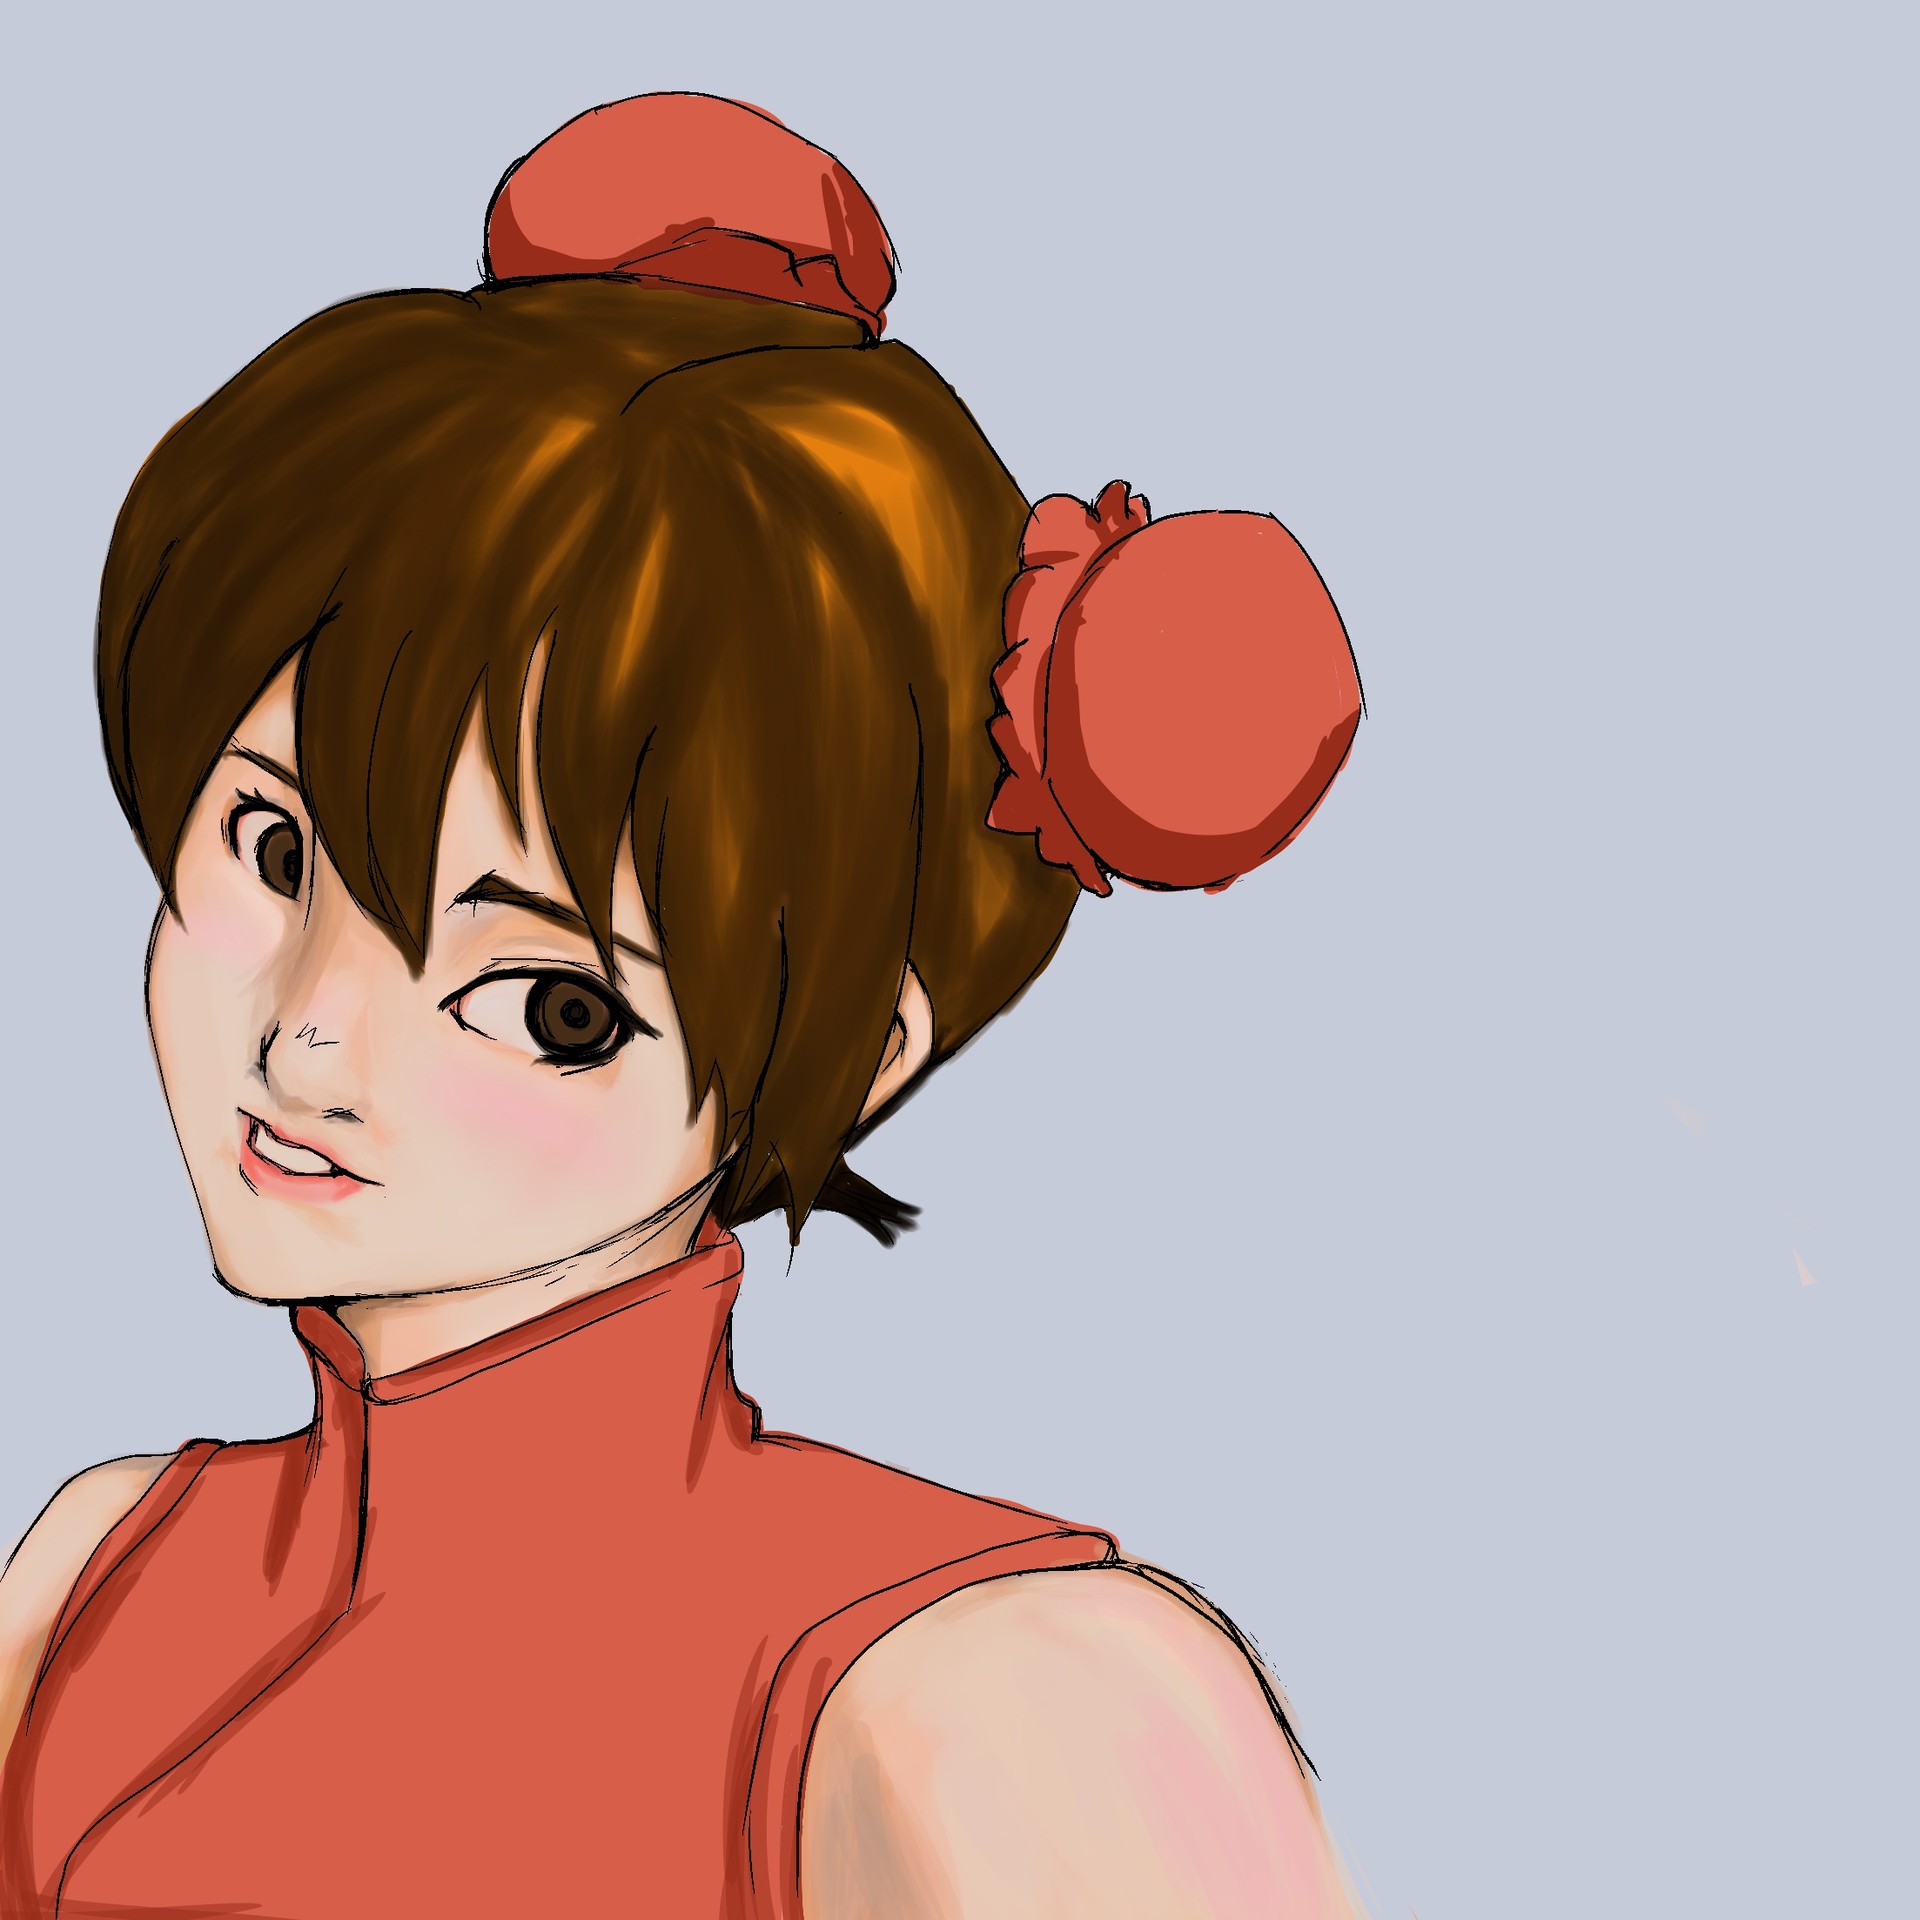 ArtStation - Anime Girl - Wearing a Chinese Dress